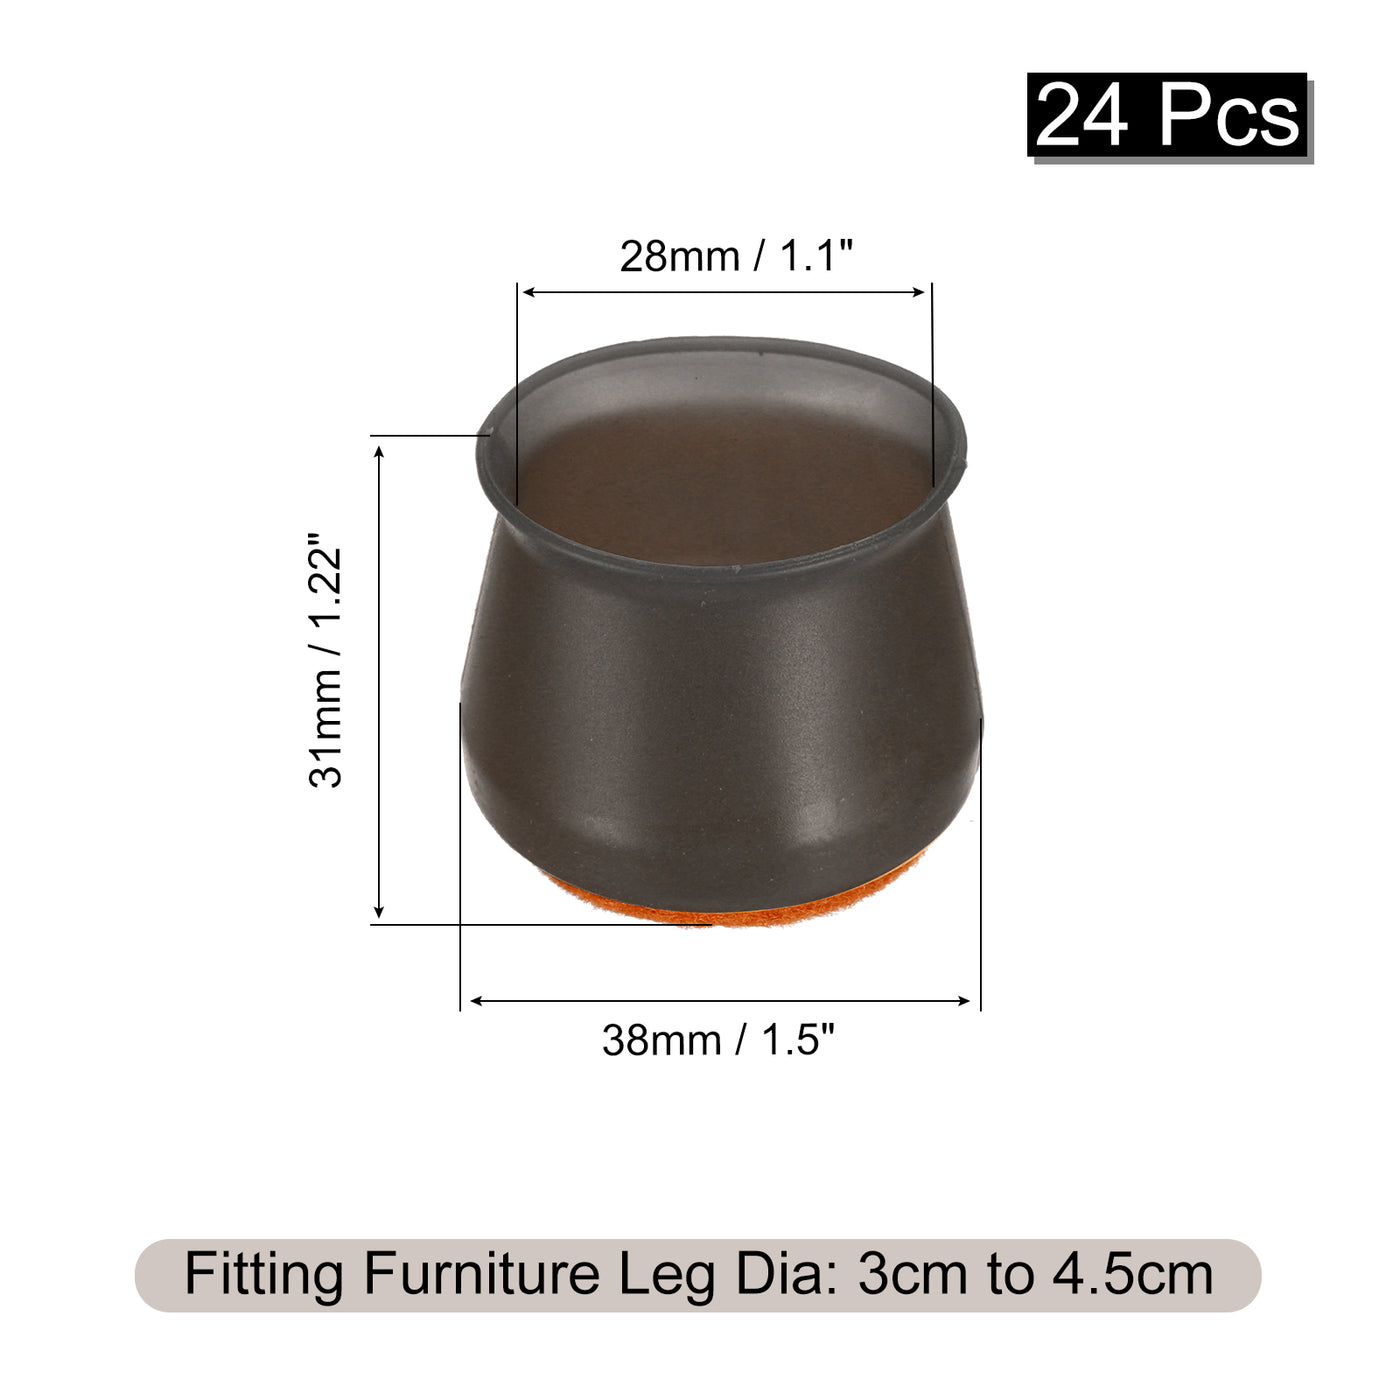 uxcell Uxcell Chair Leg Floor Protectors, 24Pcs 38mm/ 1.5" Silicone & EVA Felt Chair Leg Cover Caps for Hardwood Floors (Black)